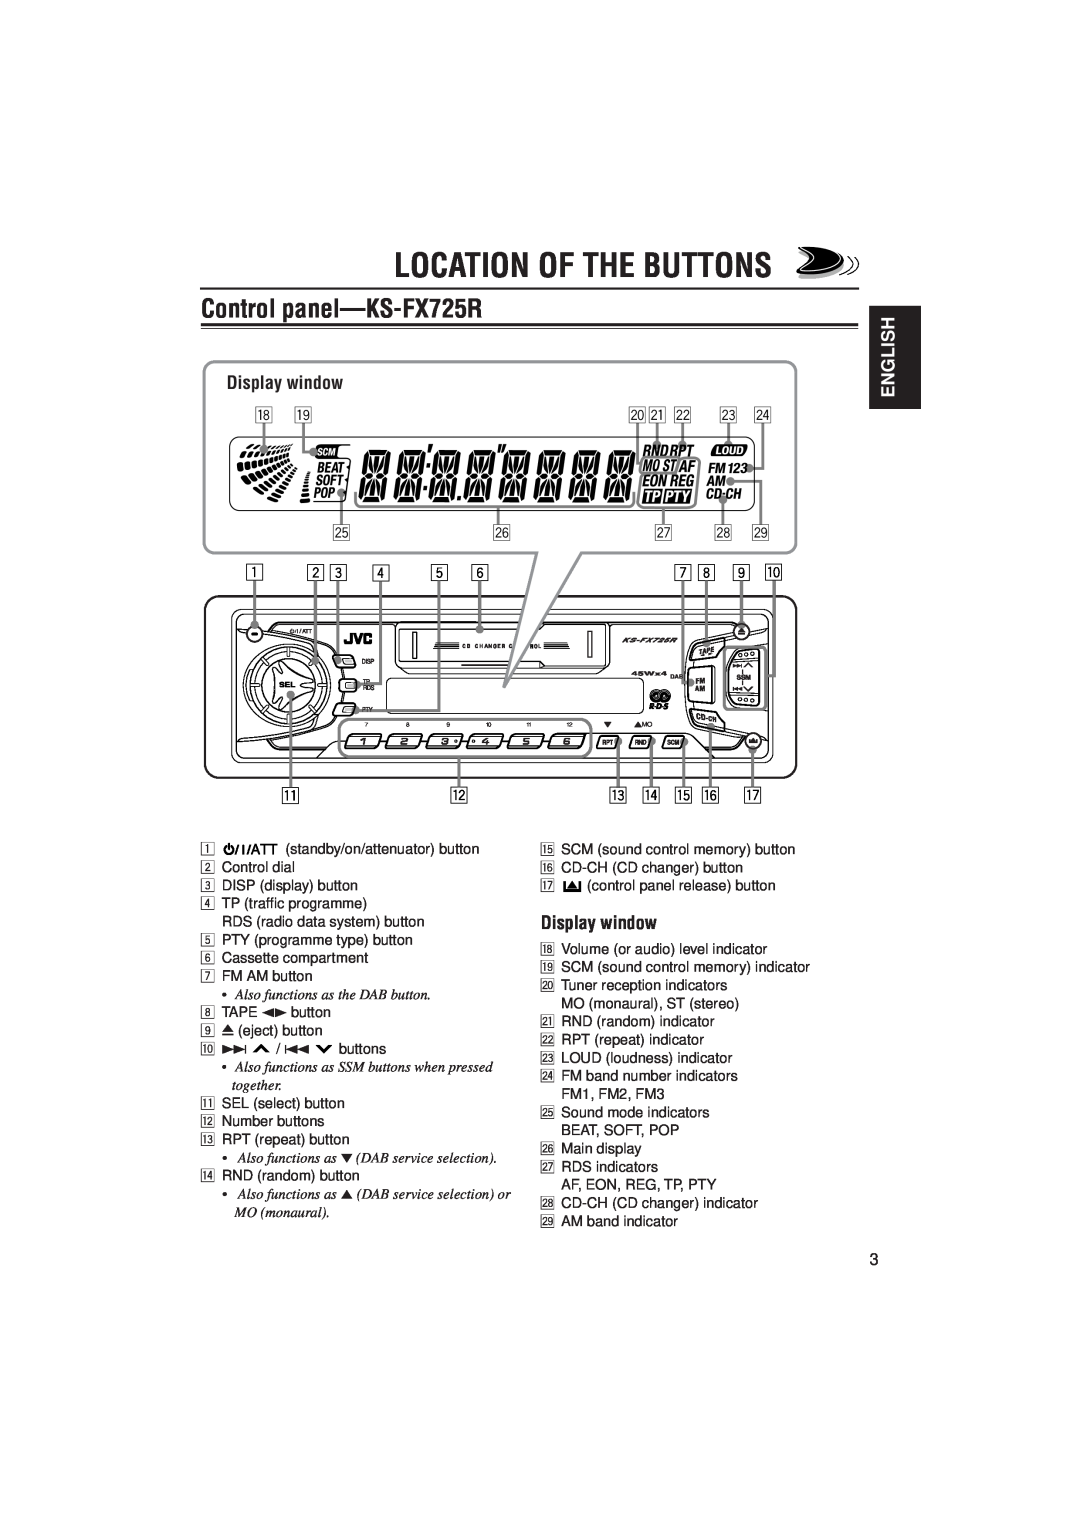 JVC KS-F525 manual Location Of The Buttons, Control panel-KS-FX725R, English 